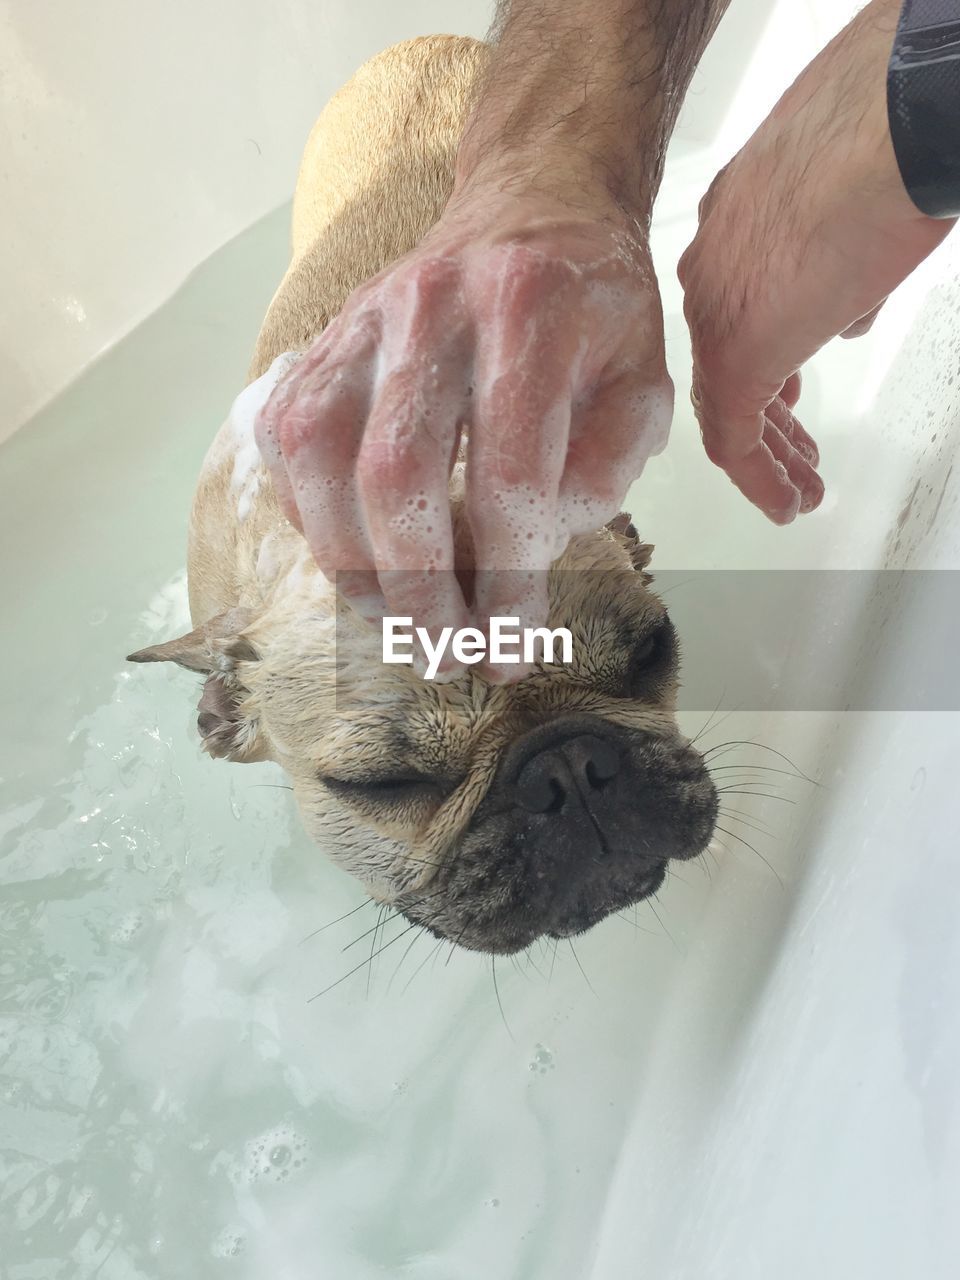 A cute french bulldog taking a bath